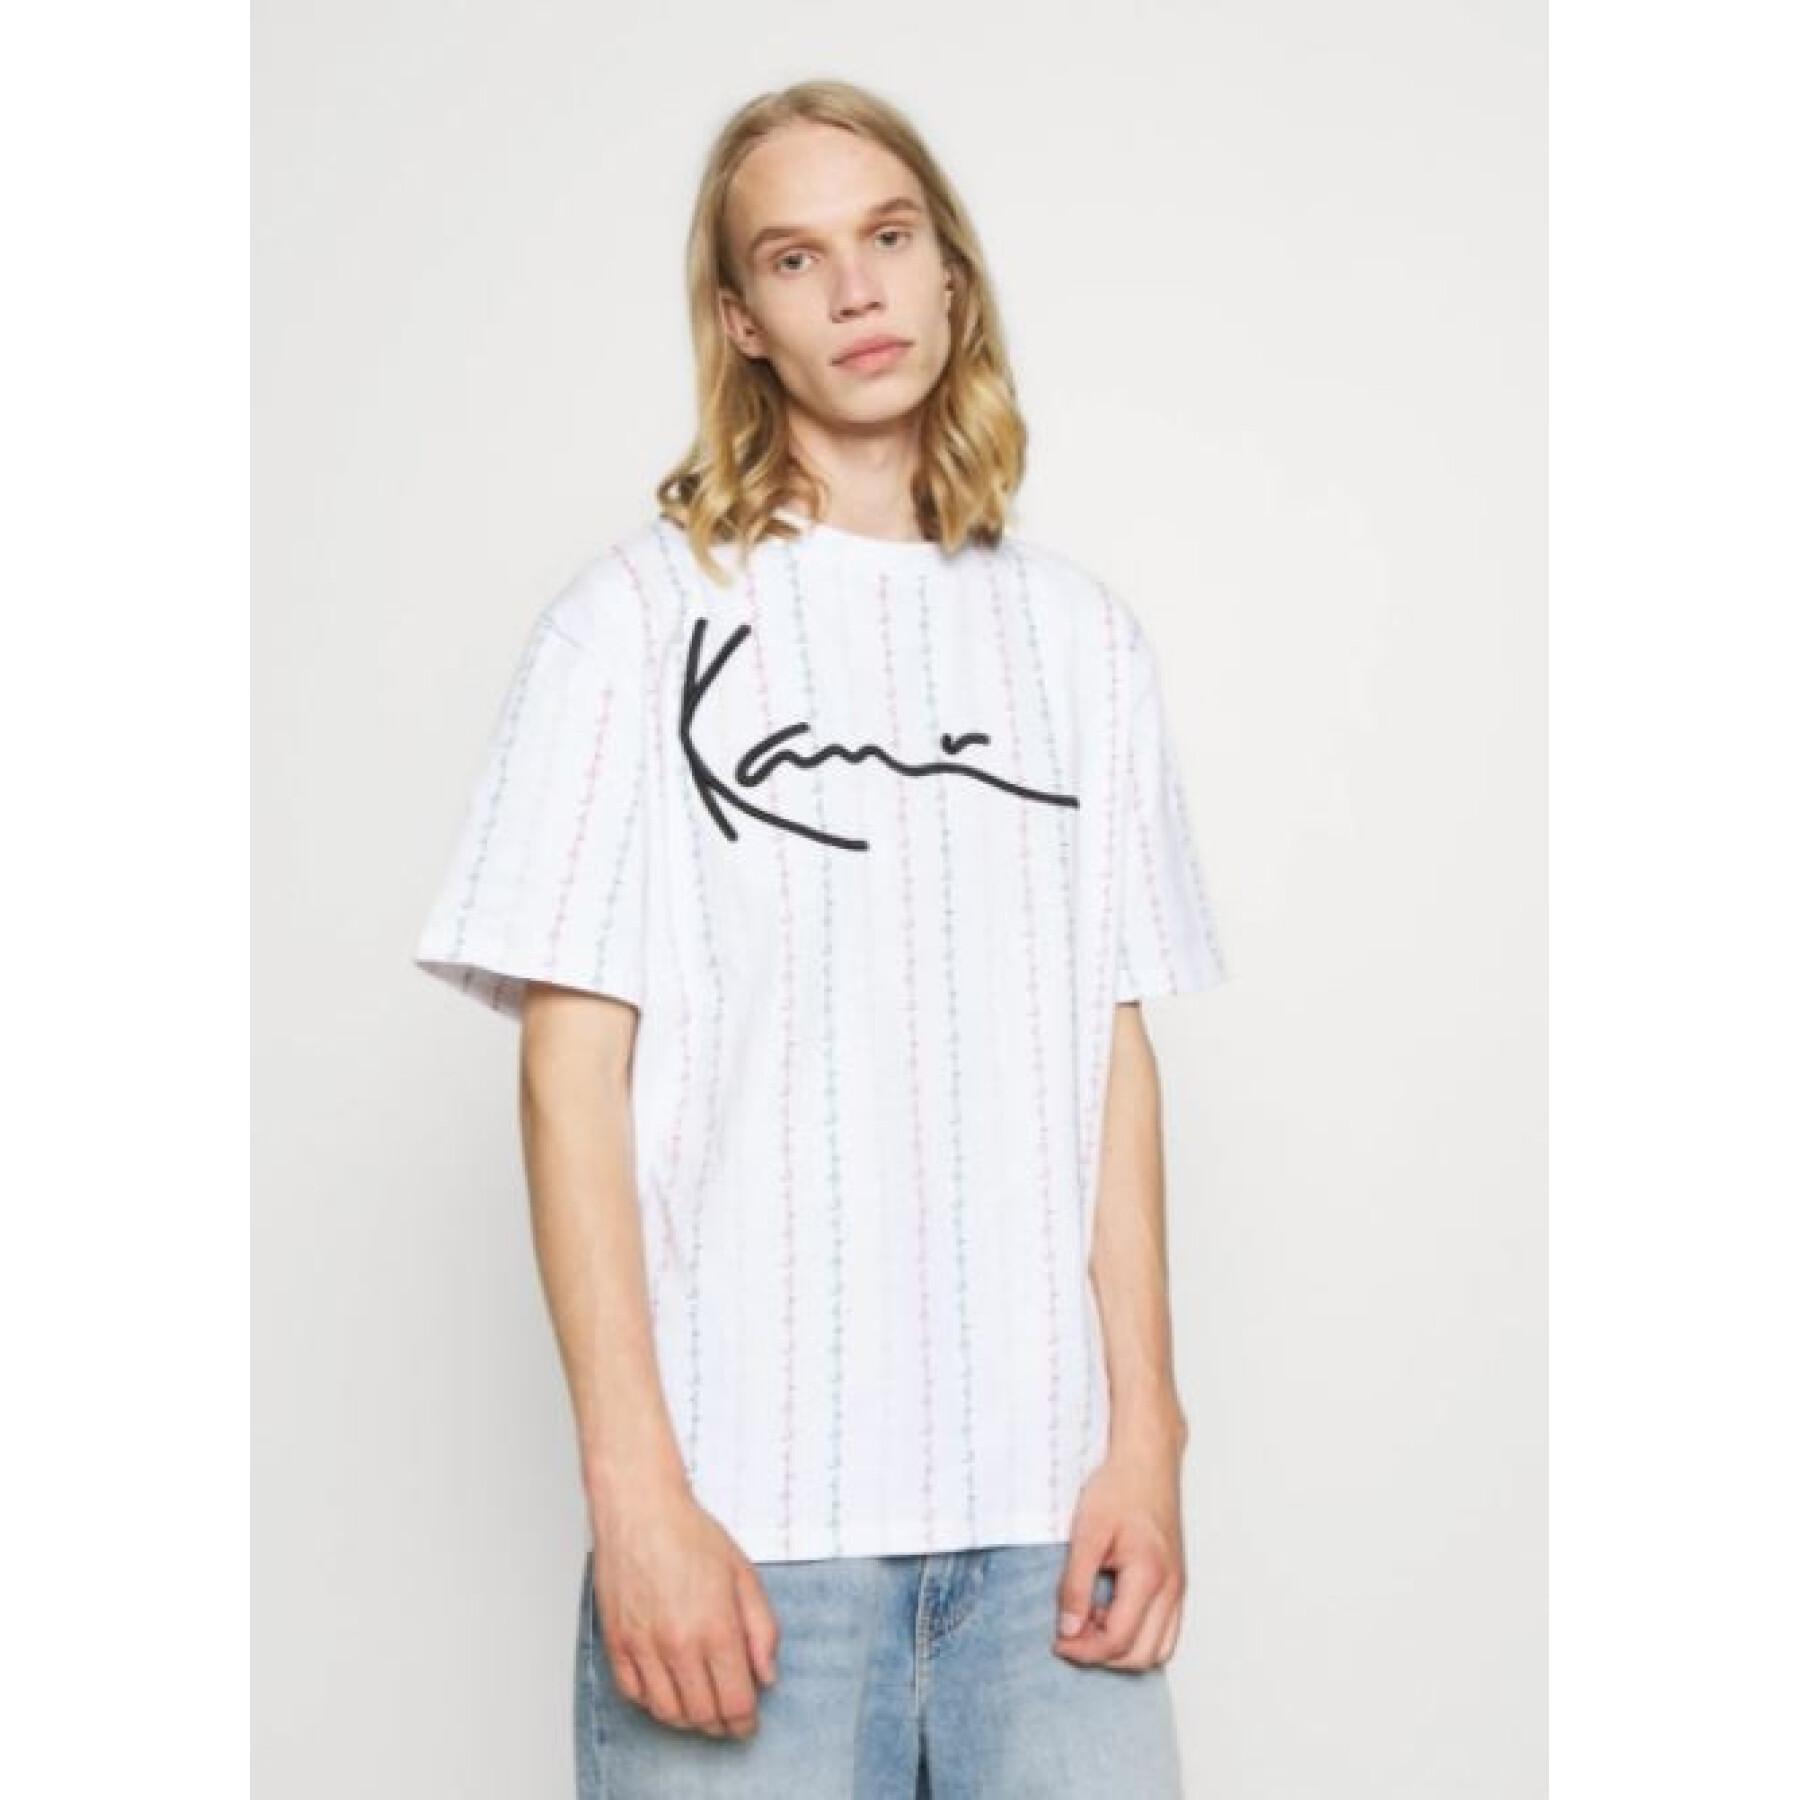 Koszulka Karl Kani signature logo pinstripe